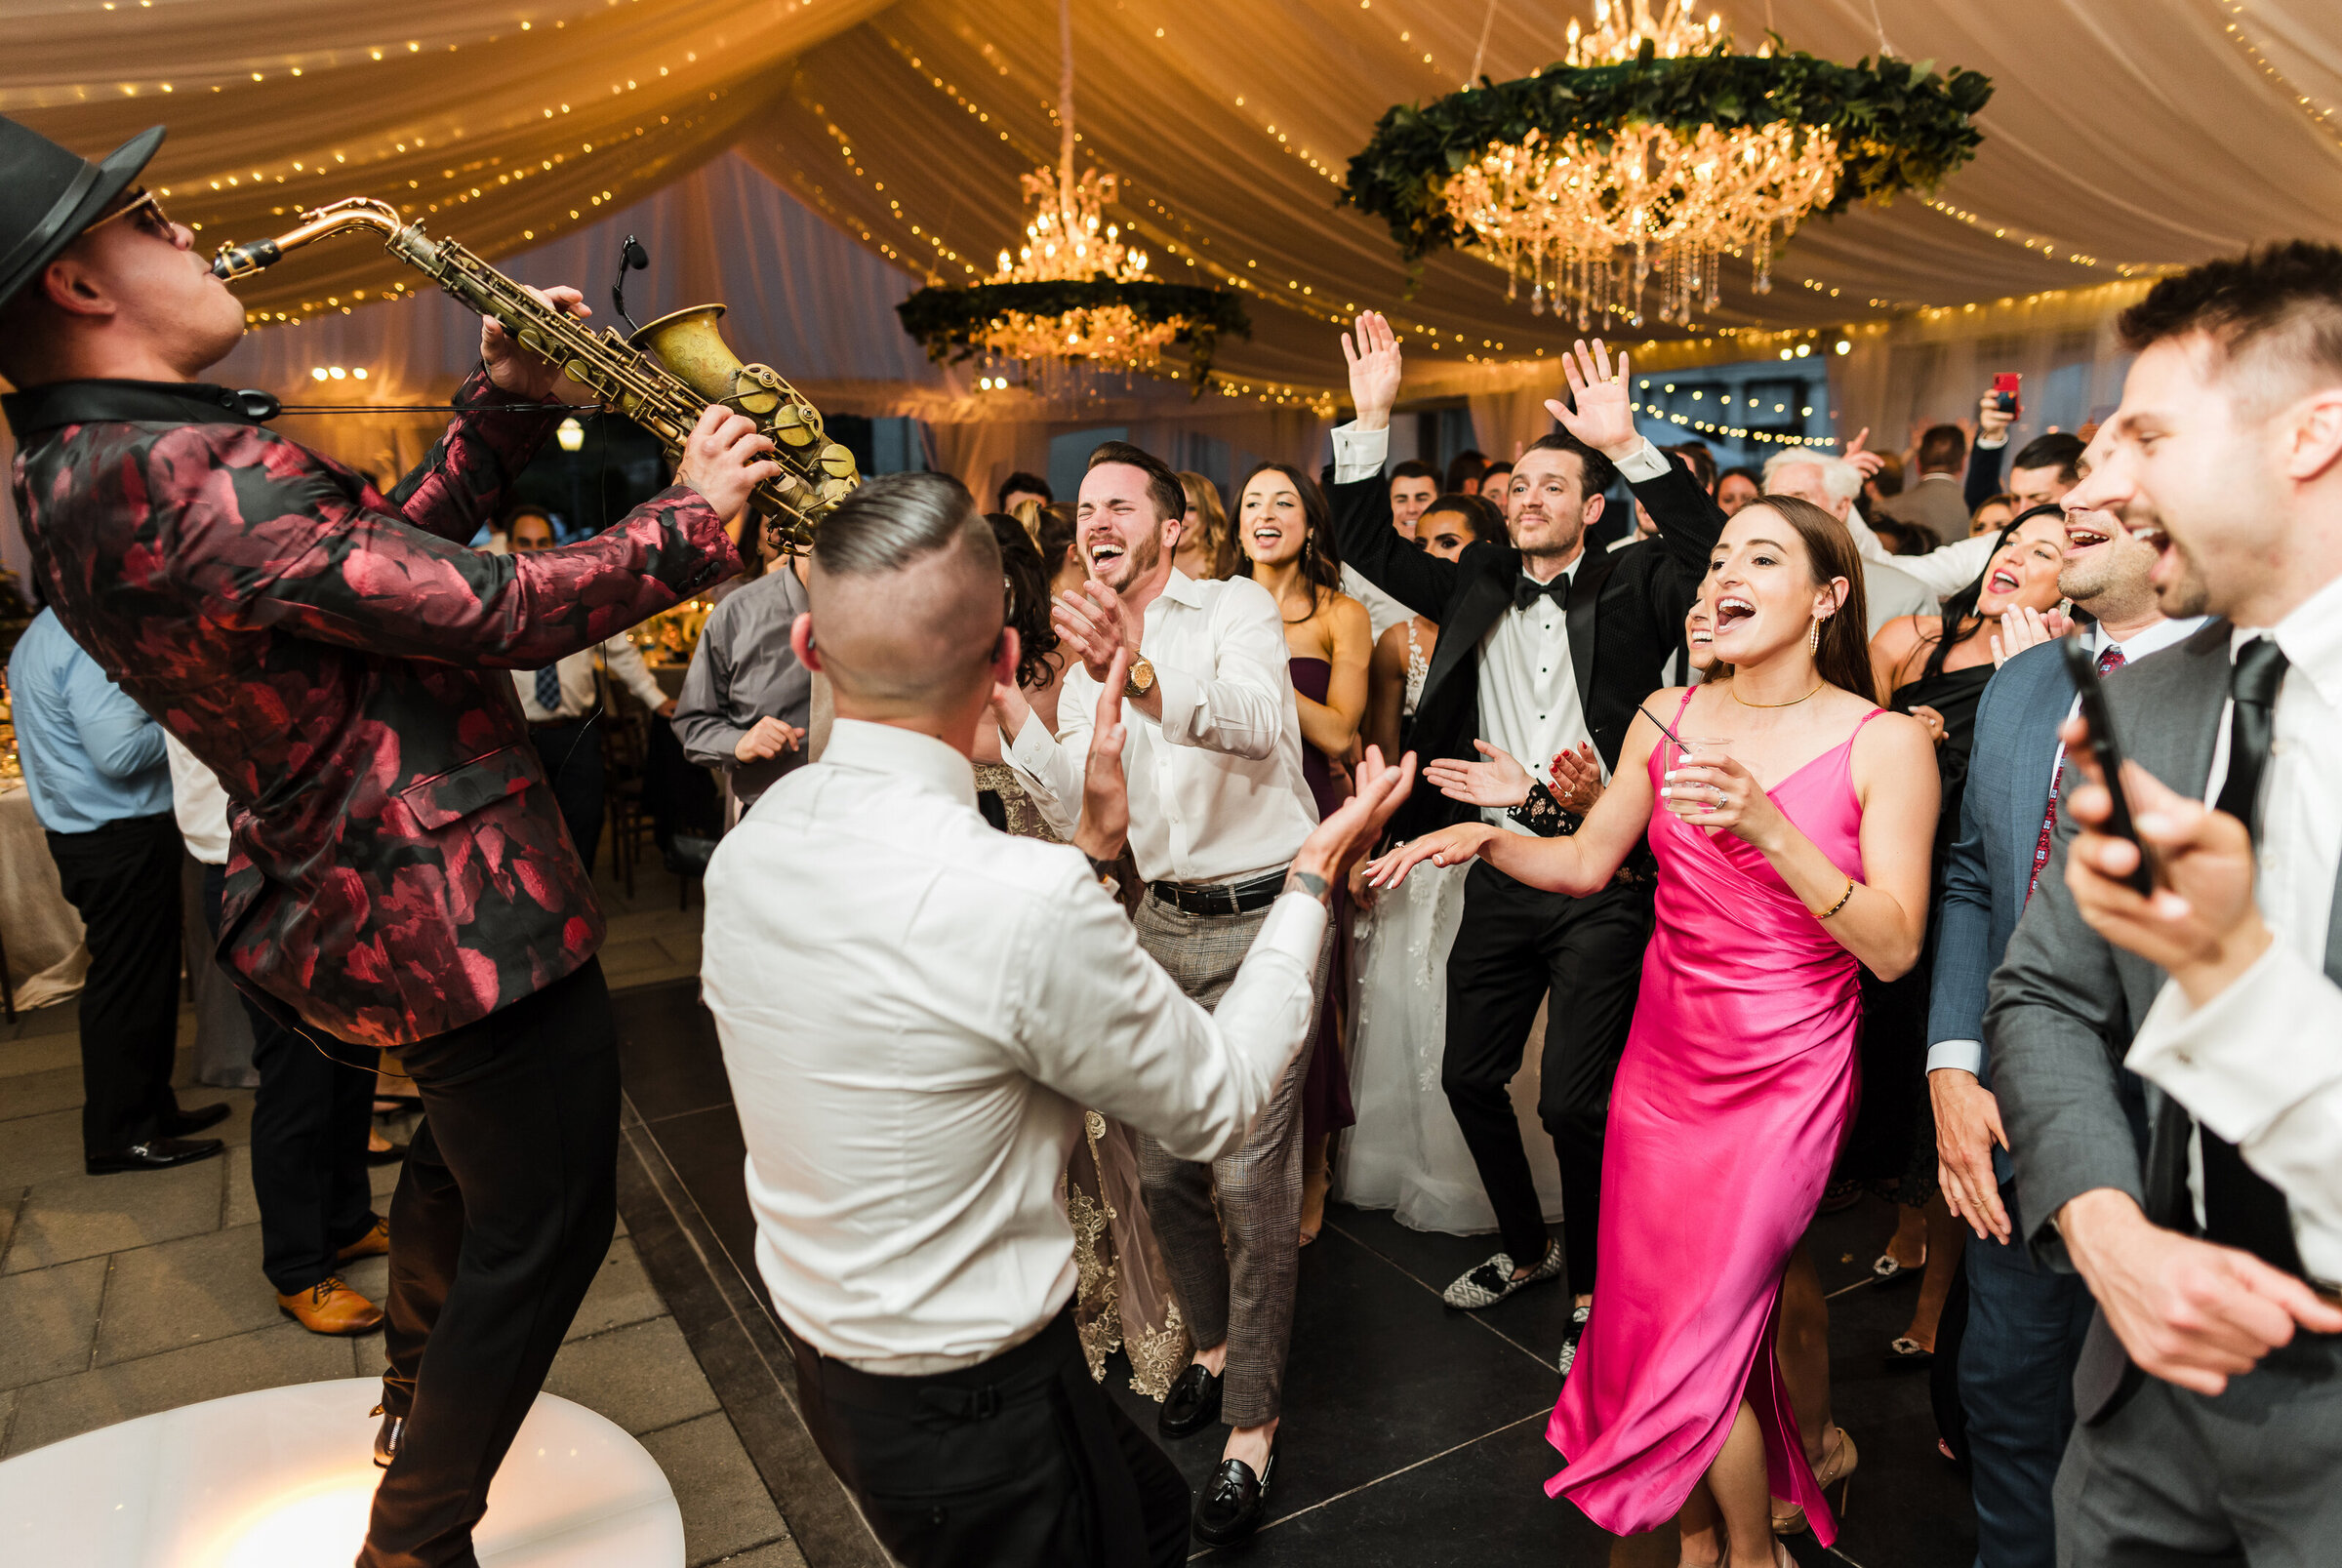 water-works-wedding-reception-dancing-photos